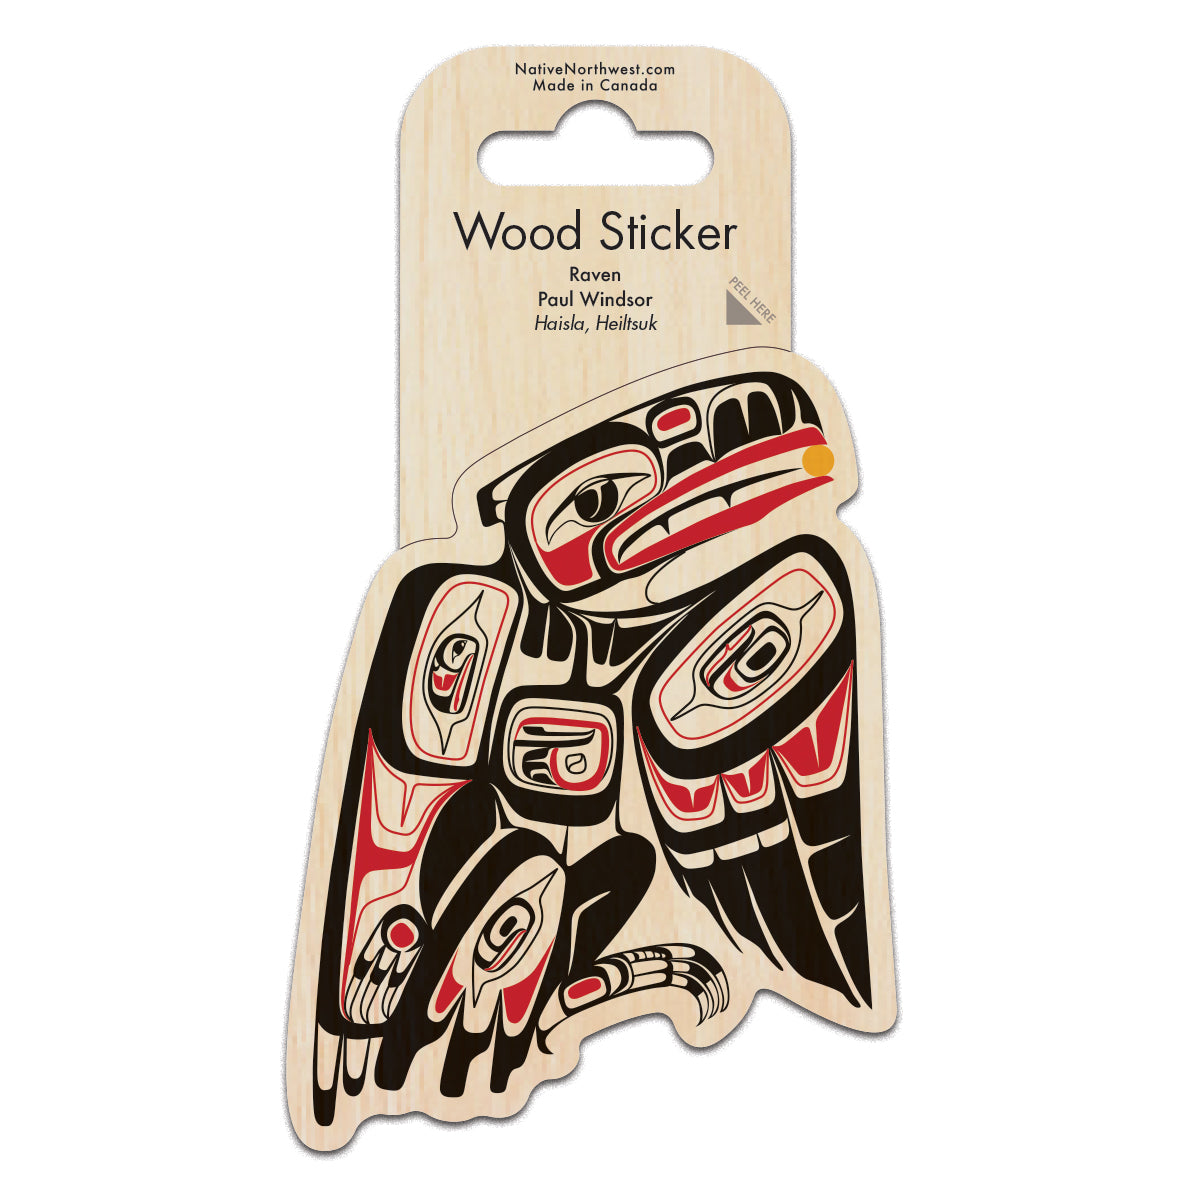 Wood Sticker Raven - Wood Sticker Raven -  - House of Himwitsa Native Art Gallery and Gifts